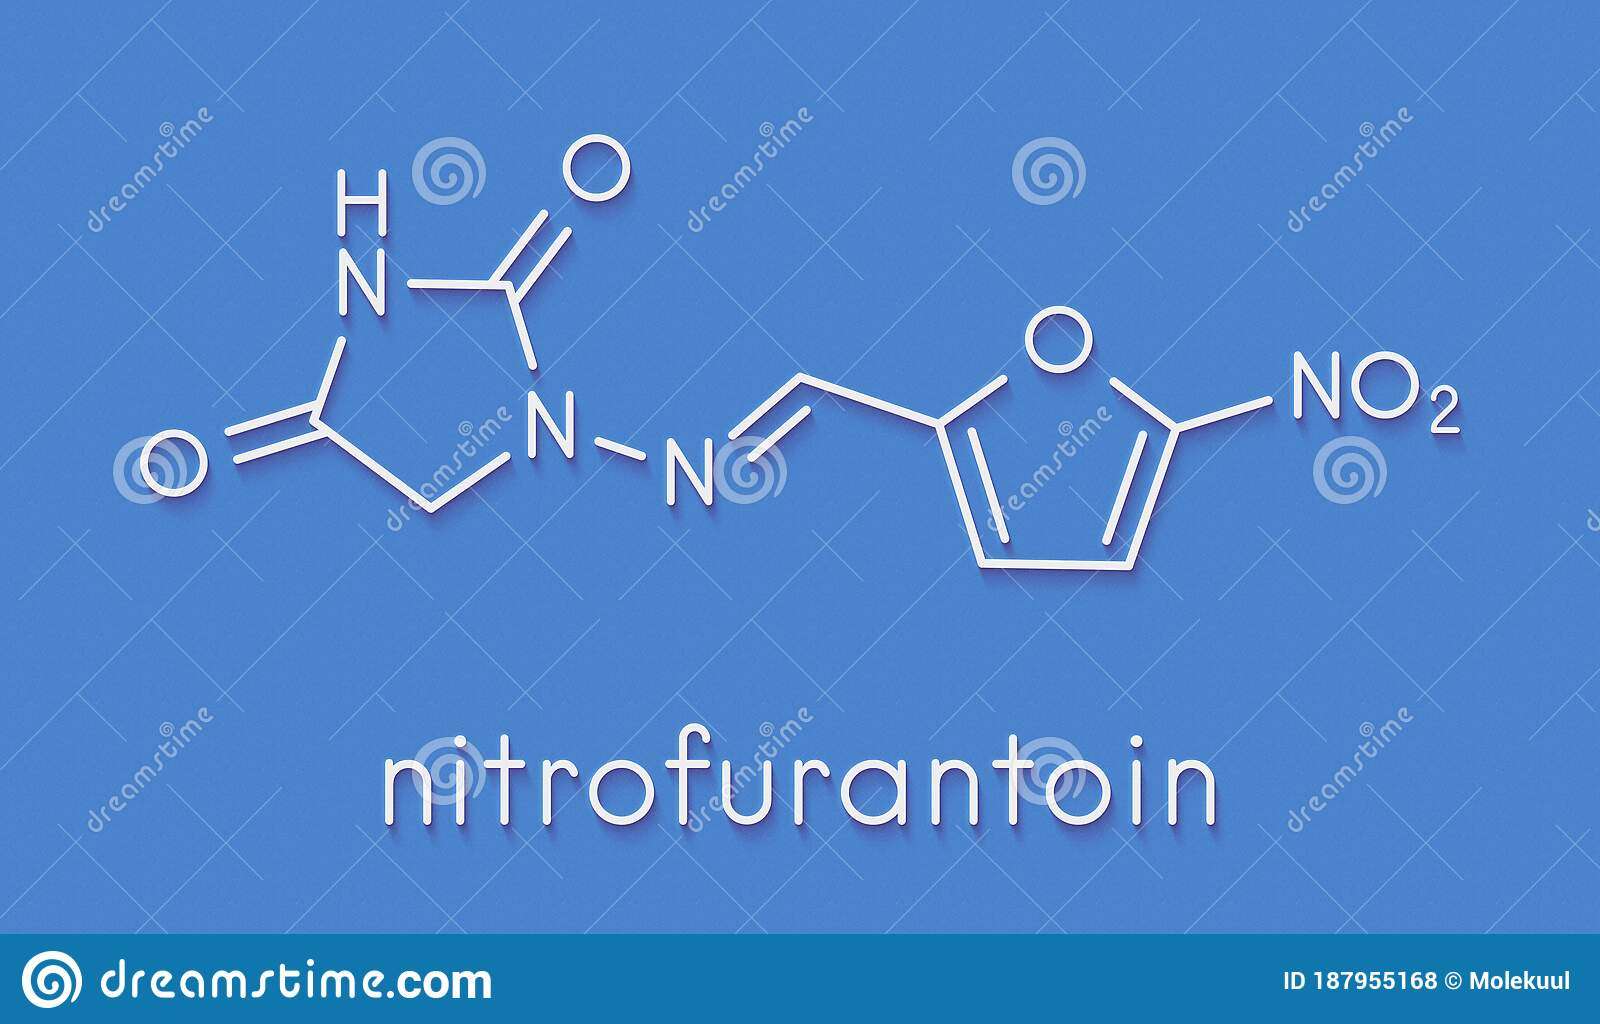 Nitrofurantoin Antibiotic Drug Molecule. Used To Treat ...